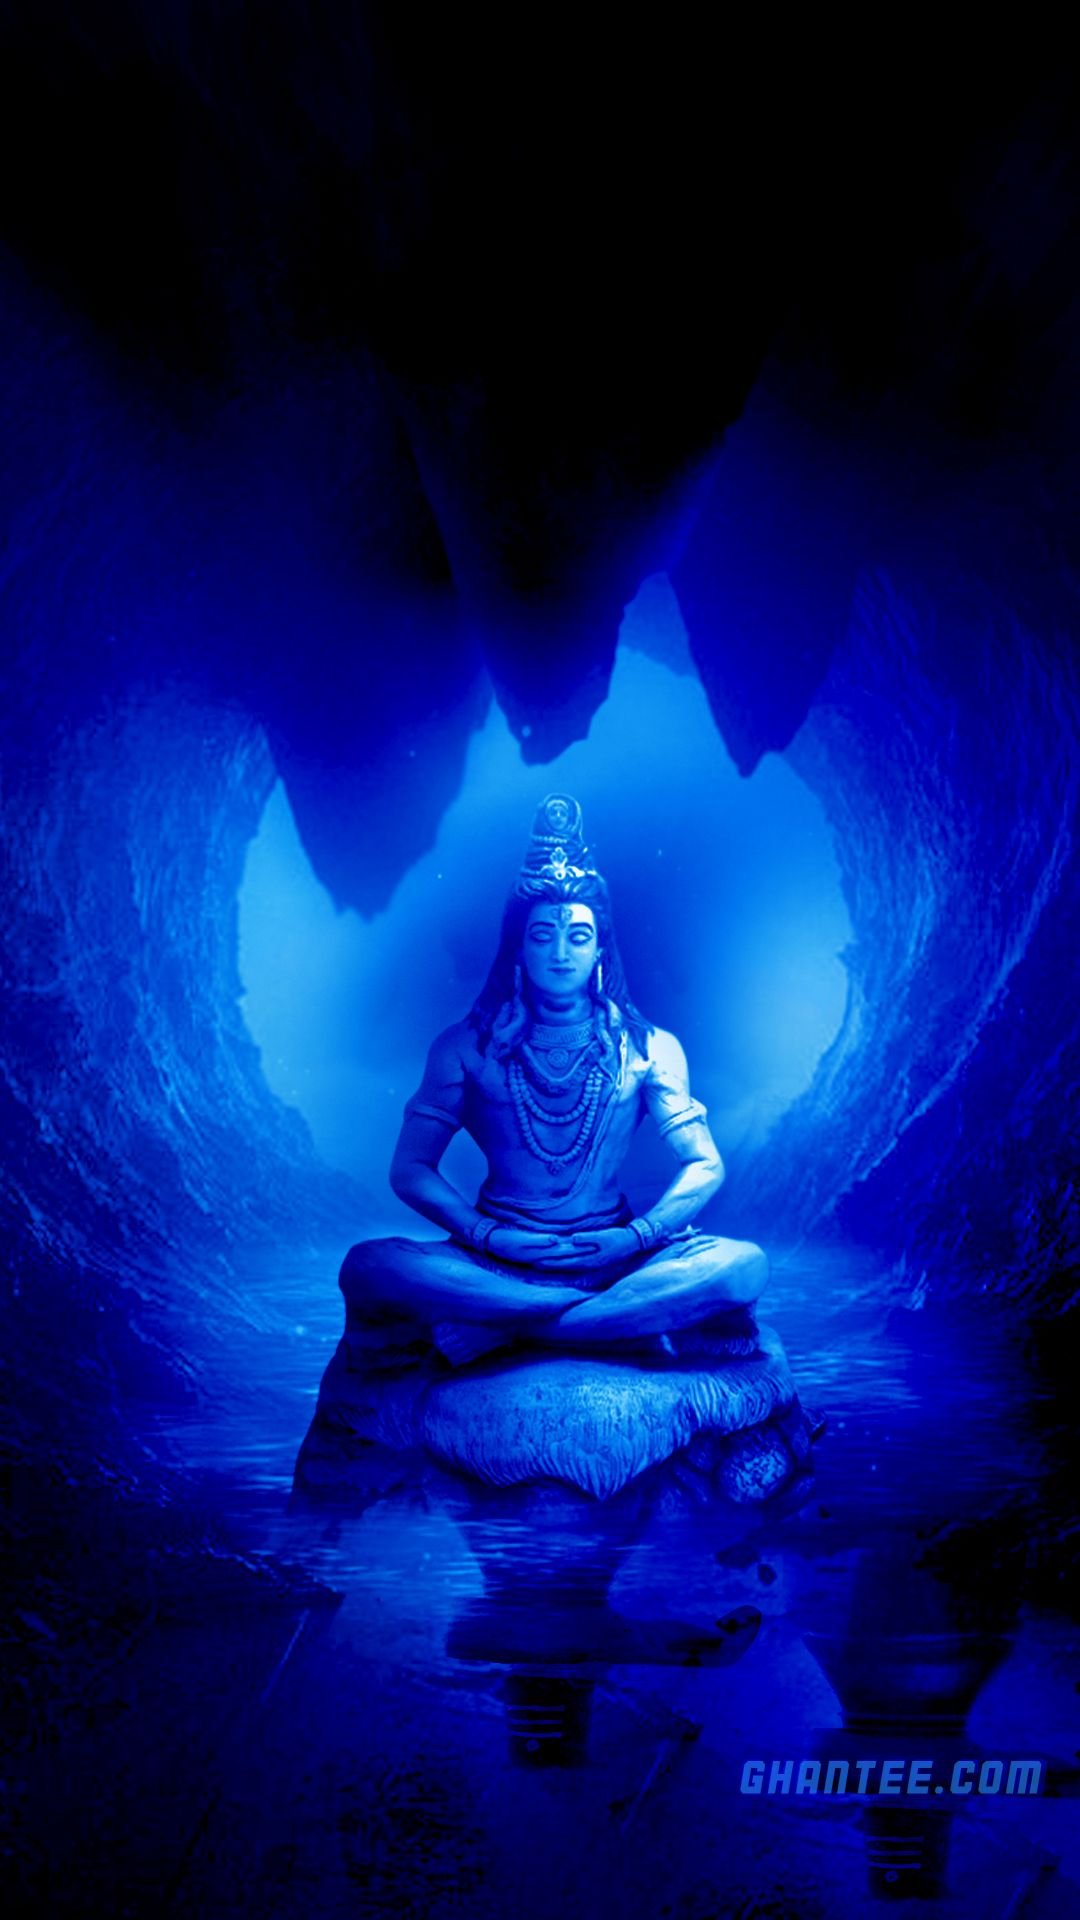 Lord Shiva meditating. : r/hinduism